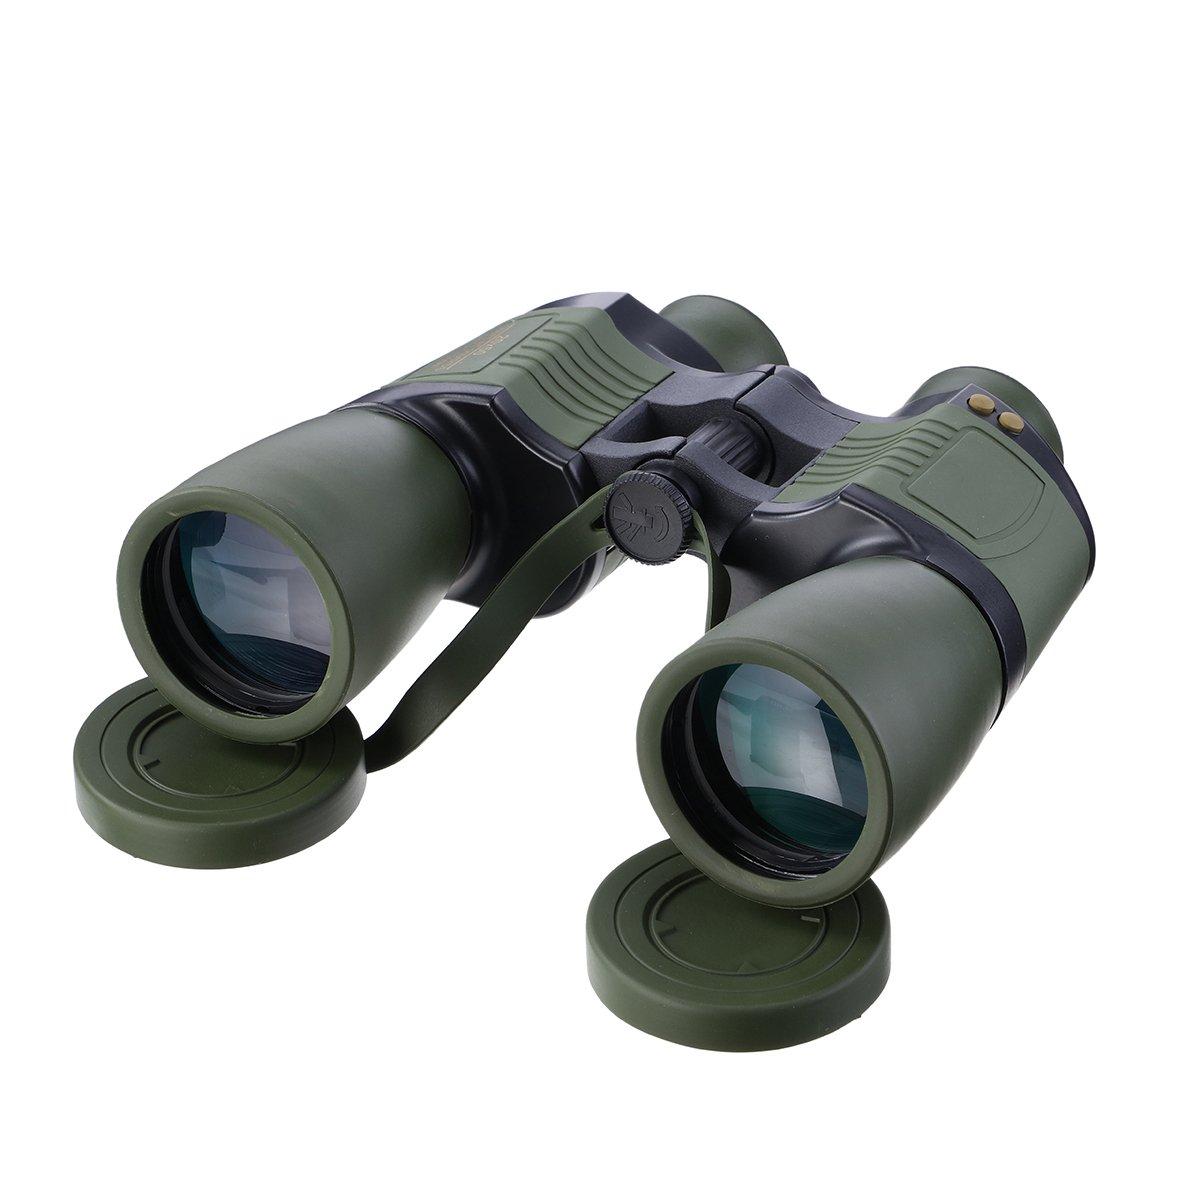 IPRee® 20x50 Professional Binocular Tactical Army Military Telescope Camping Travel